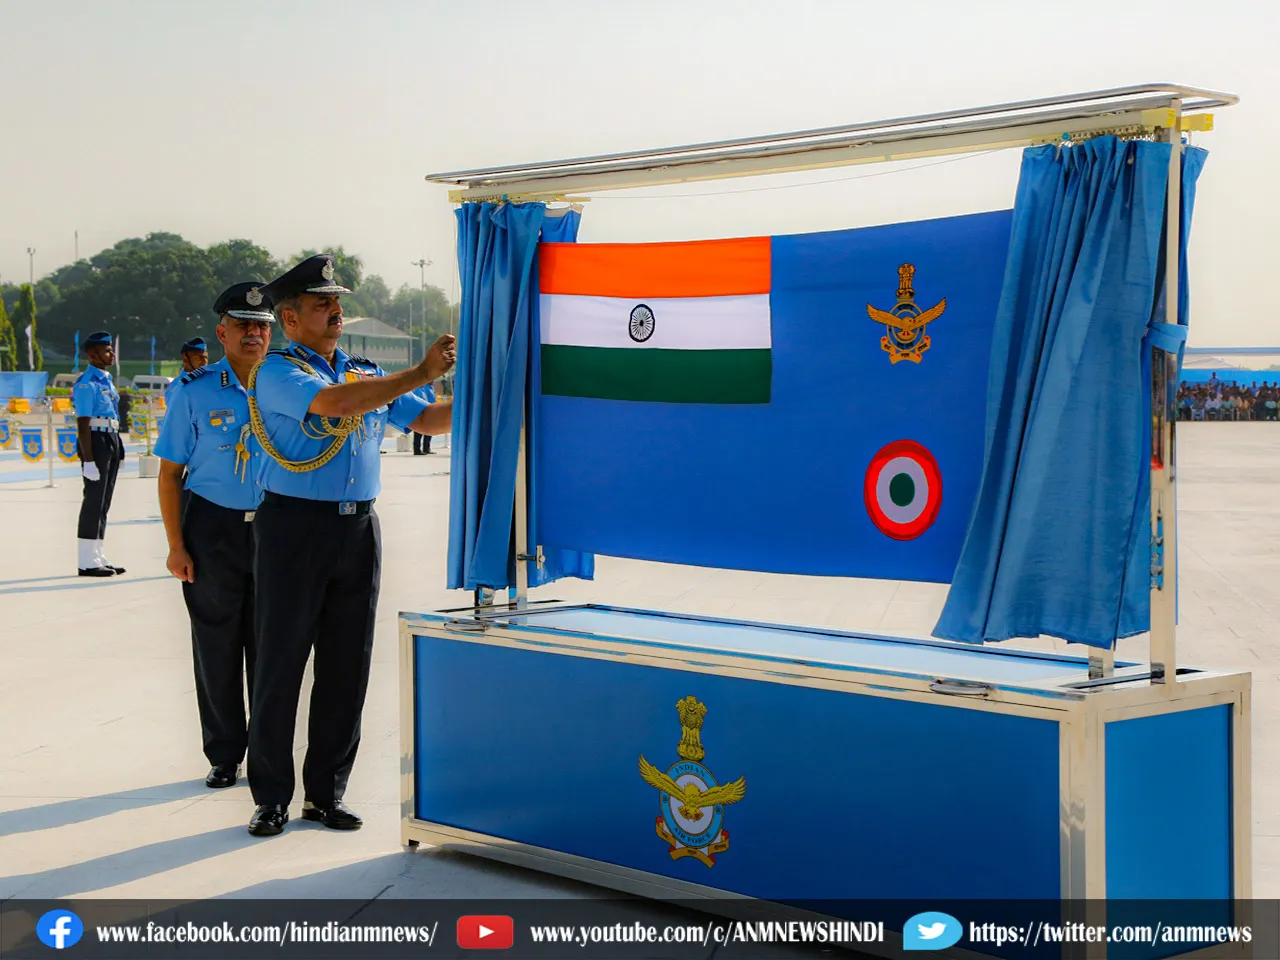 Indian Air Force Day: भारतीय वायुसेना को 72 साल बाद मिला नया फ्लैग (VIDEO)